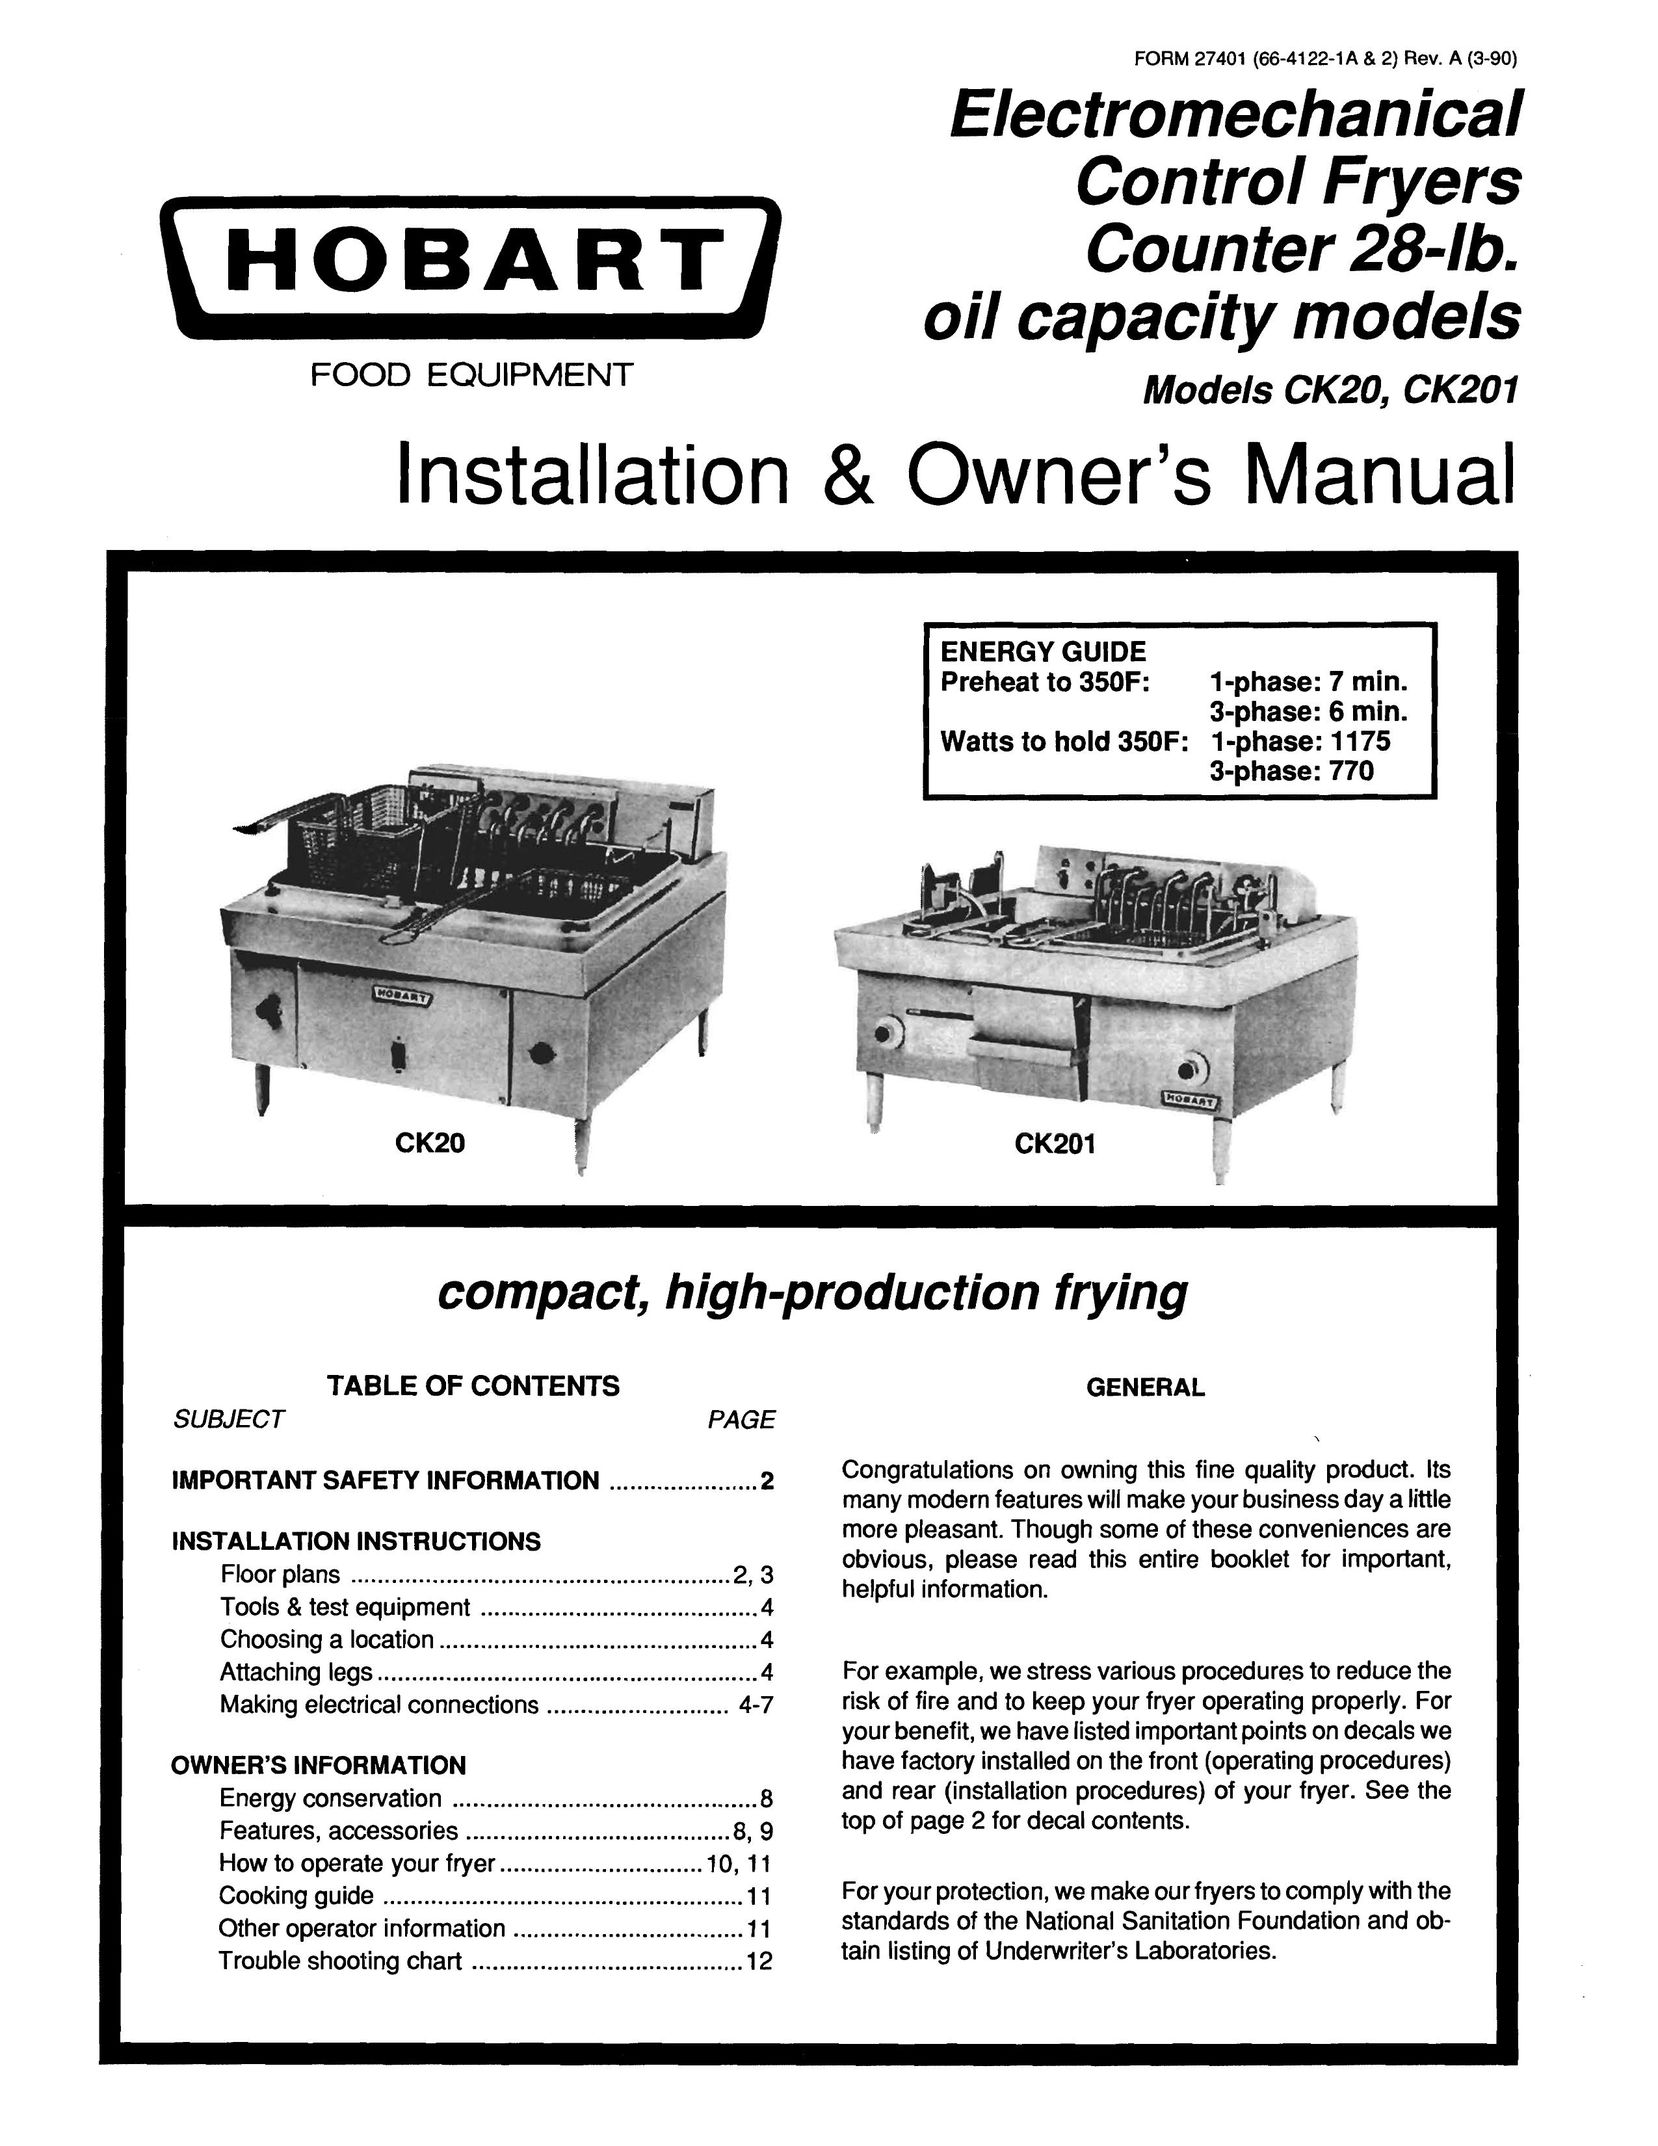 Hobart CK201 Fryer User Manual